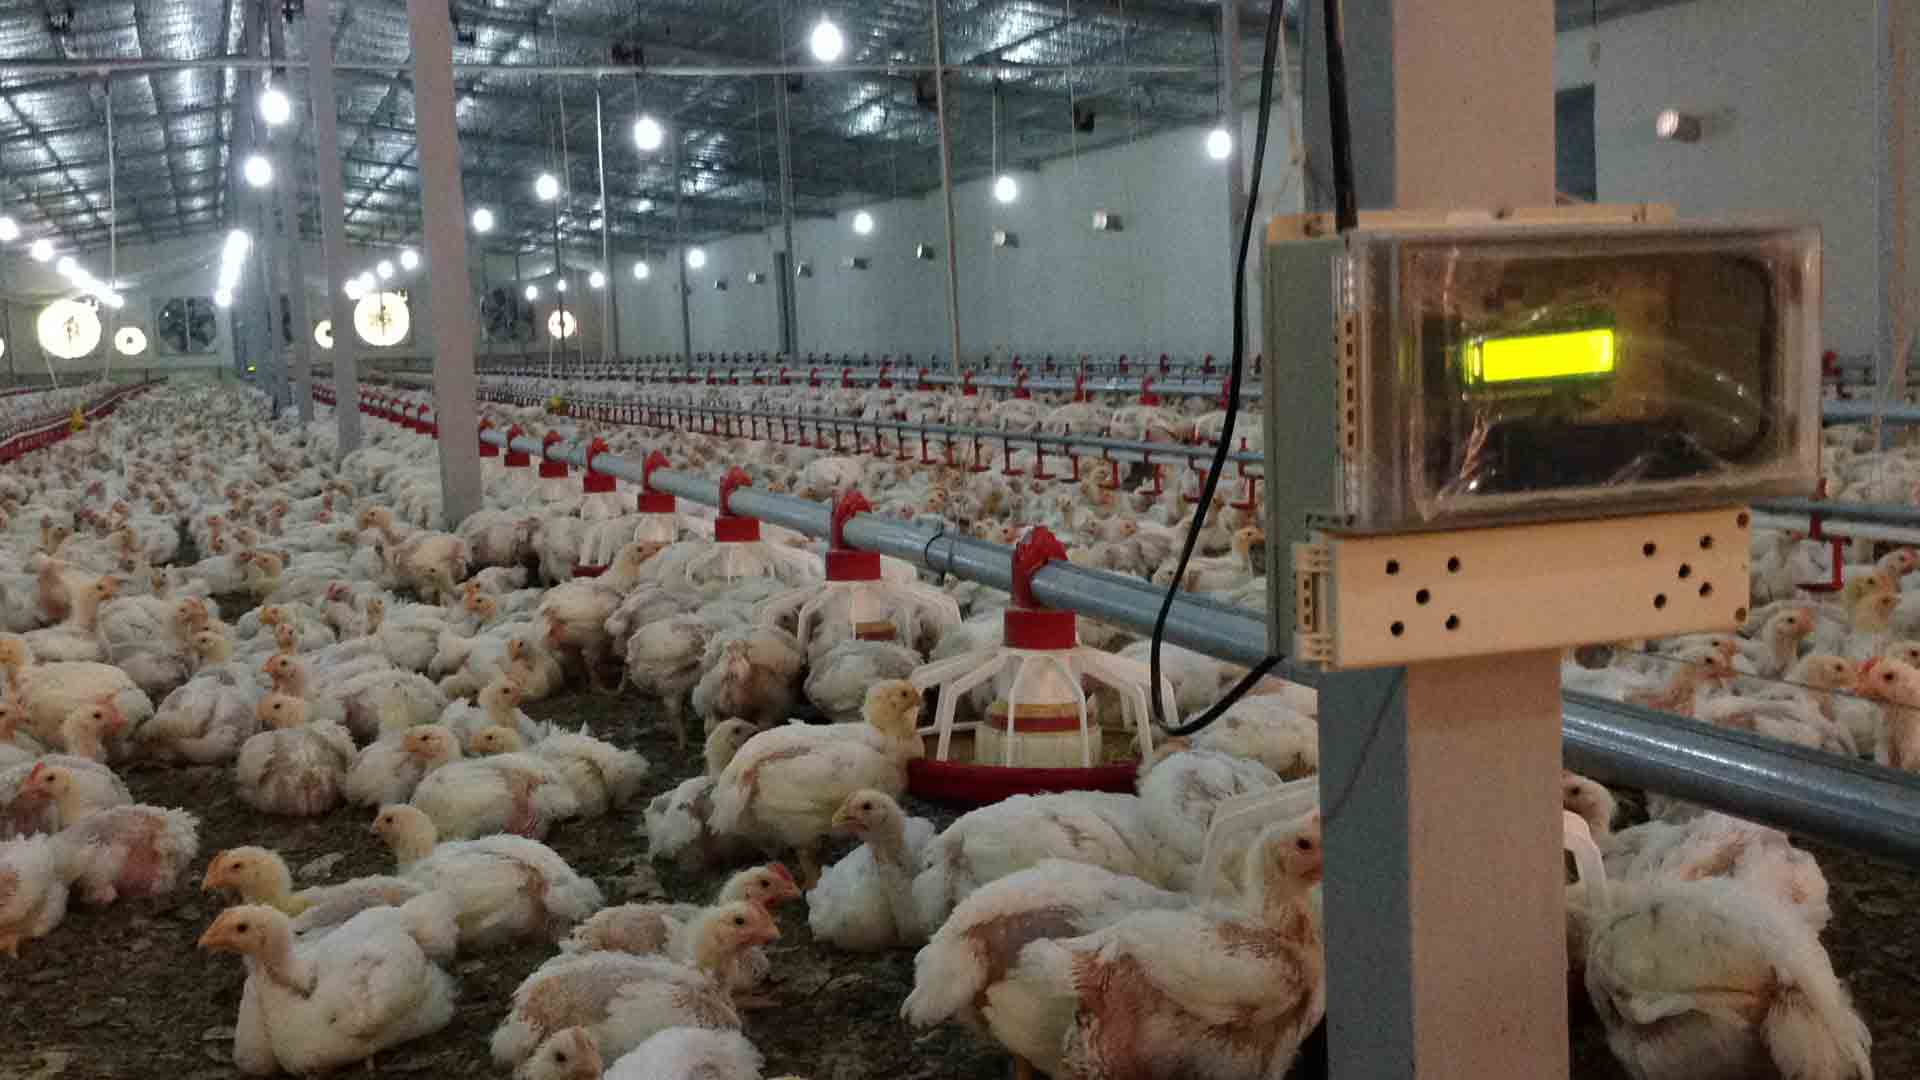 NAPADA Poultry automation for 4 salons Alertis model